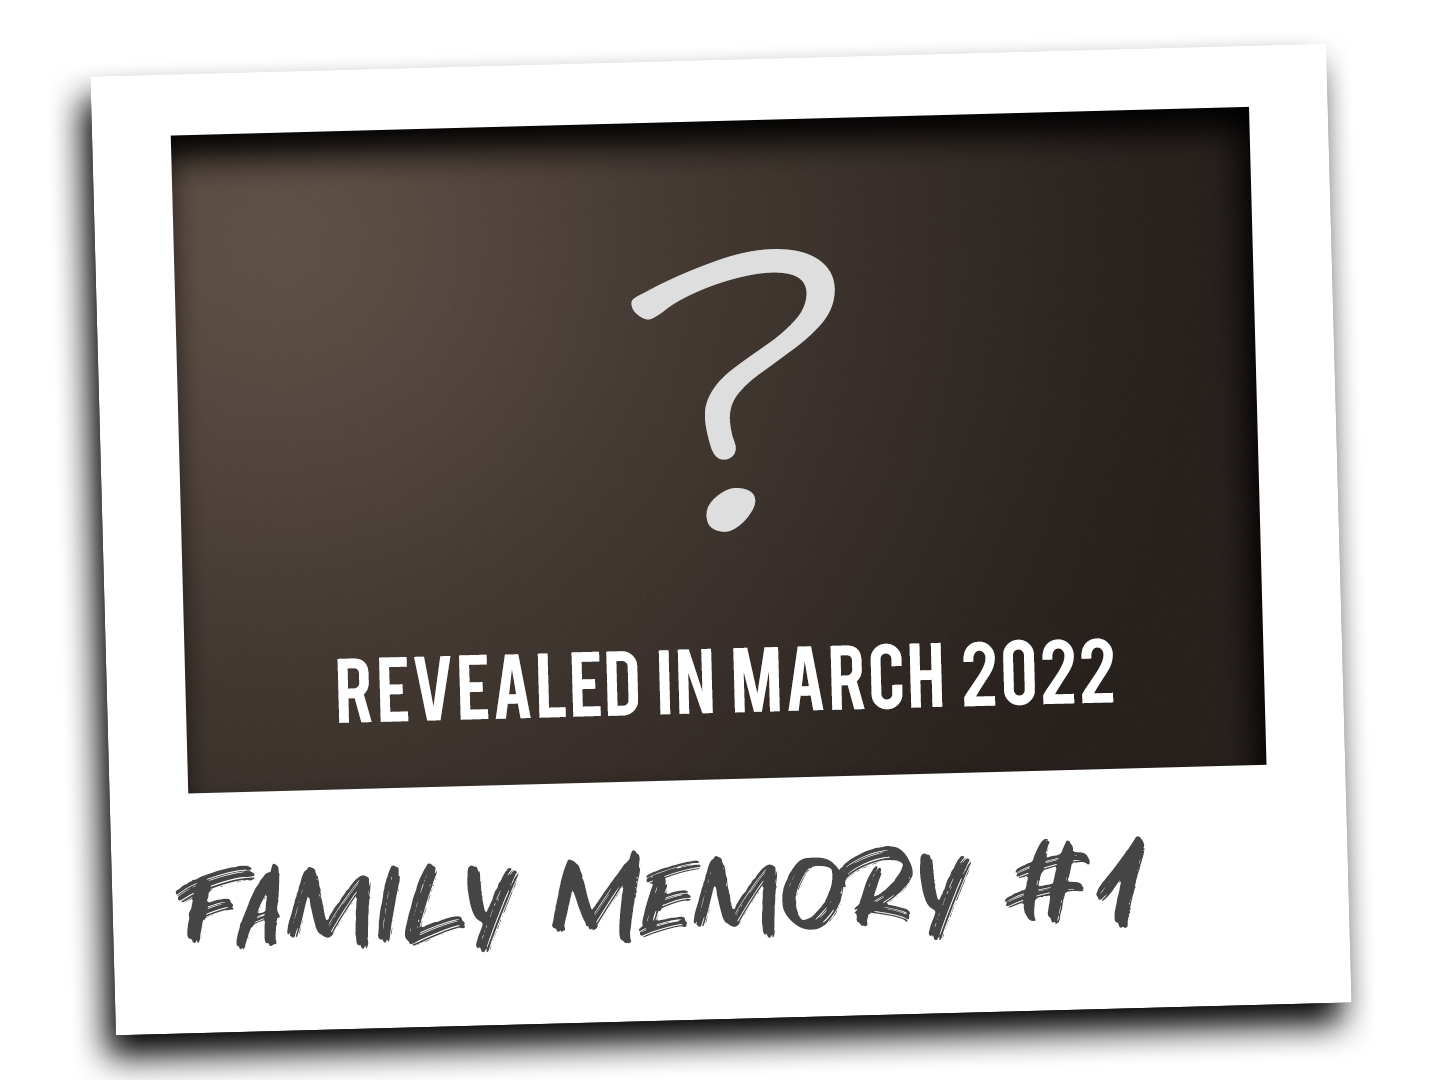 Family Memory #1